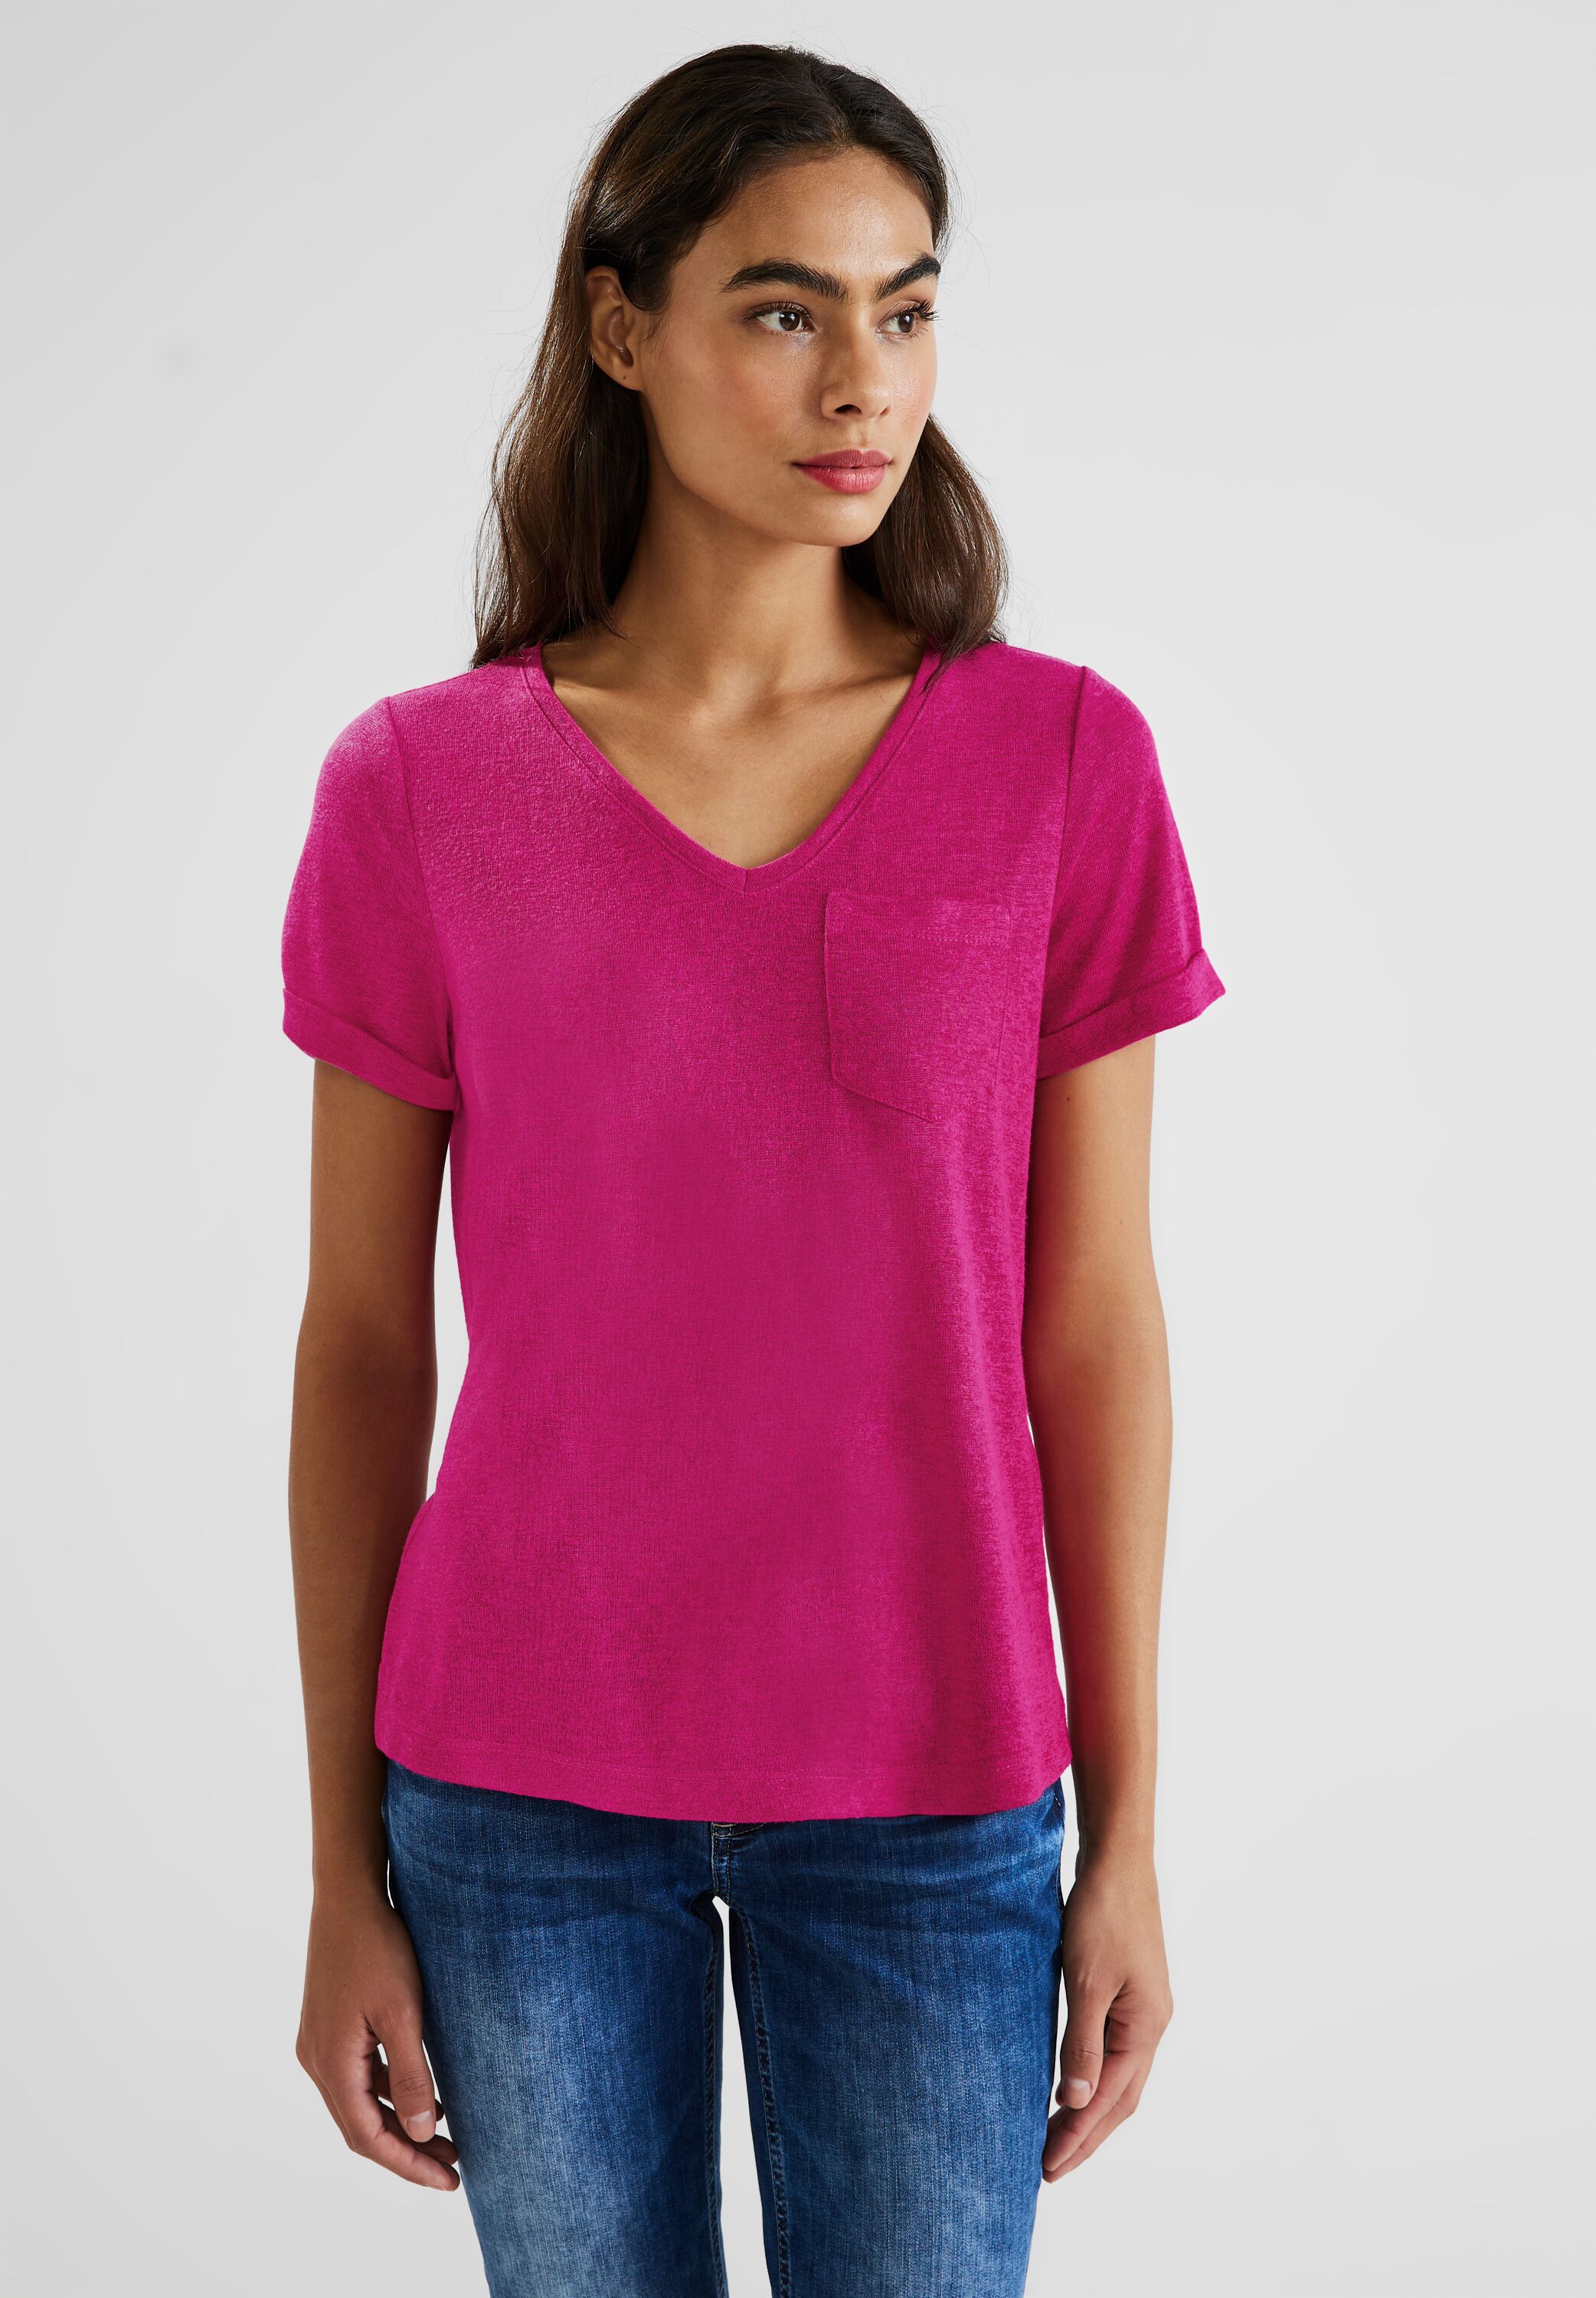 Street One T-Shirt Pink Mode A319585-14717 in - im SALE CONCEPT Nu reduziert